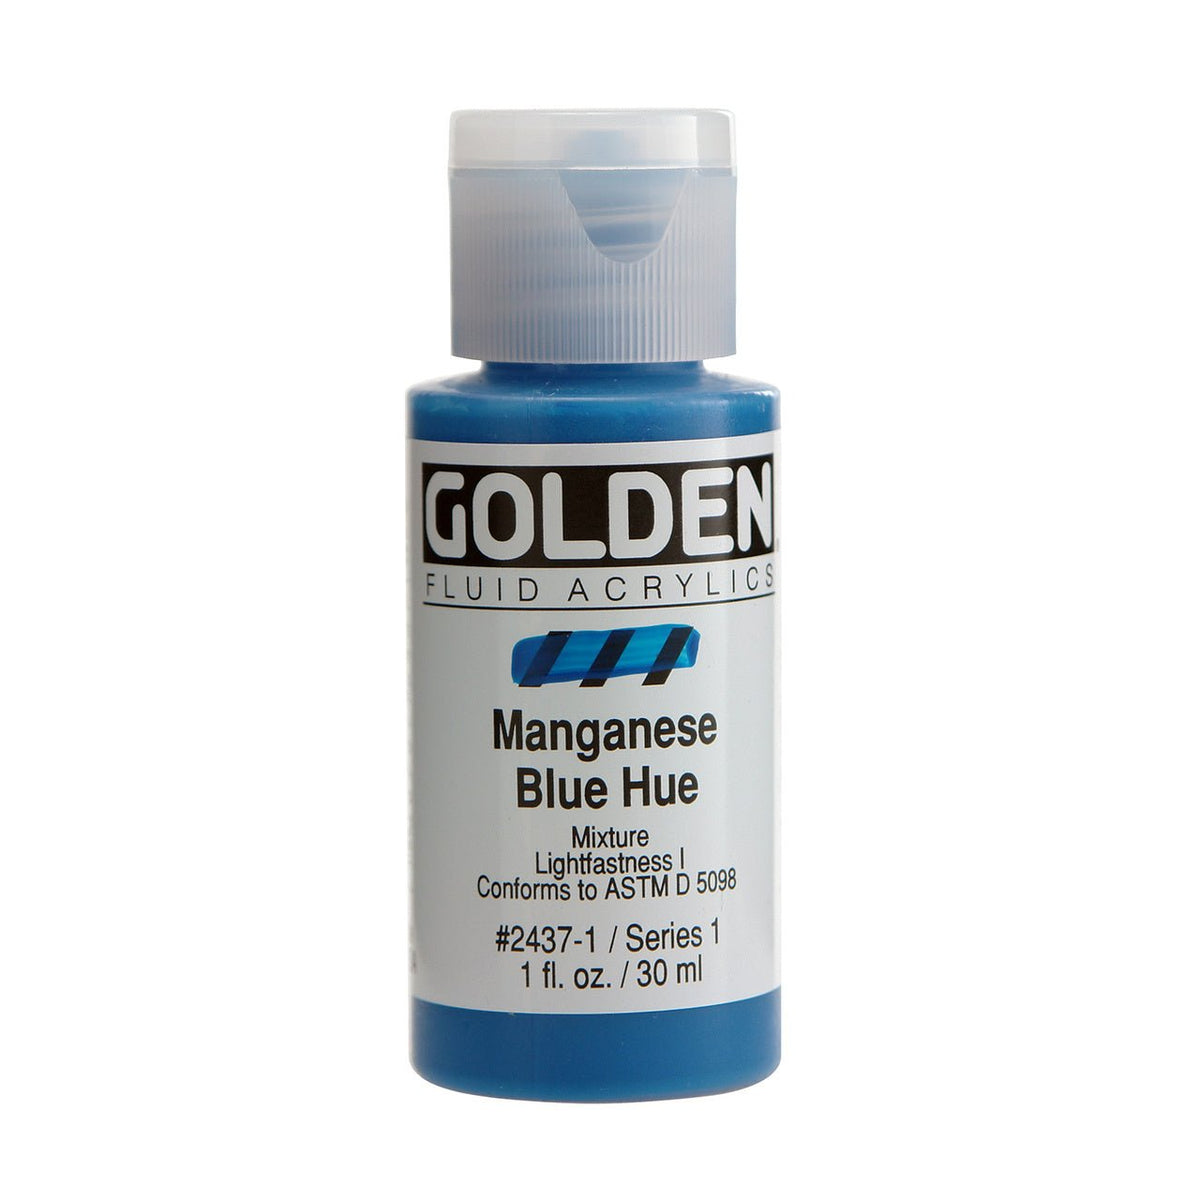 Golden Fluid Acrylic Manganese Blue Hue 1 oz - merriartist.com